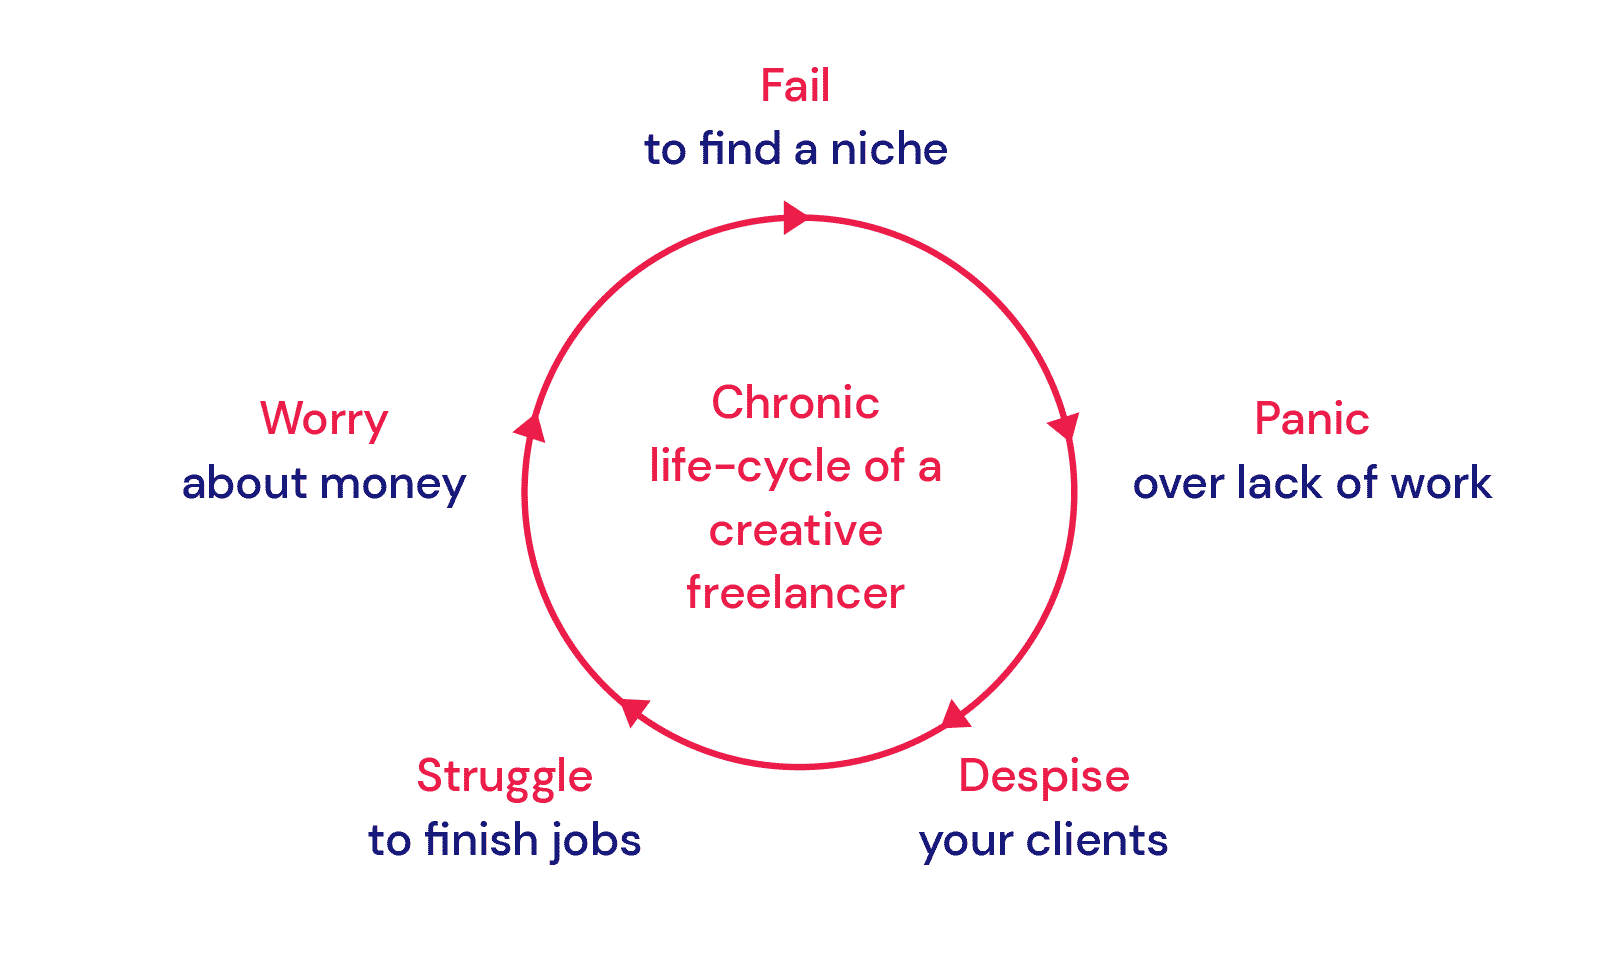 Chronic life-cycle of a creative freelancer